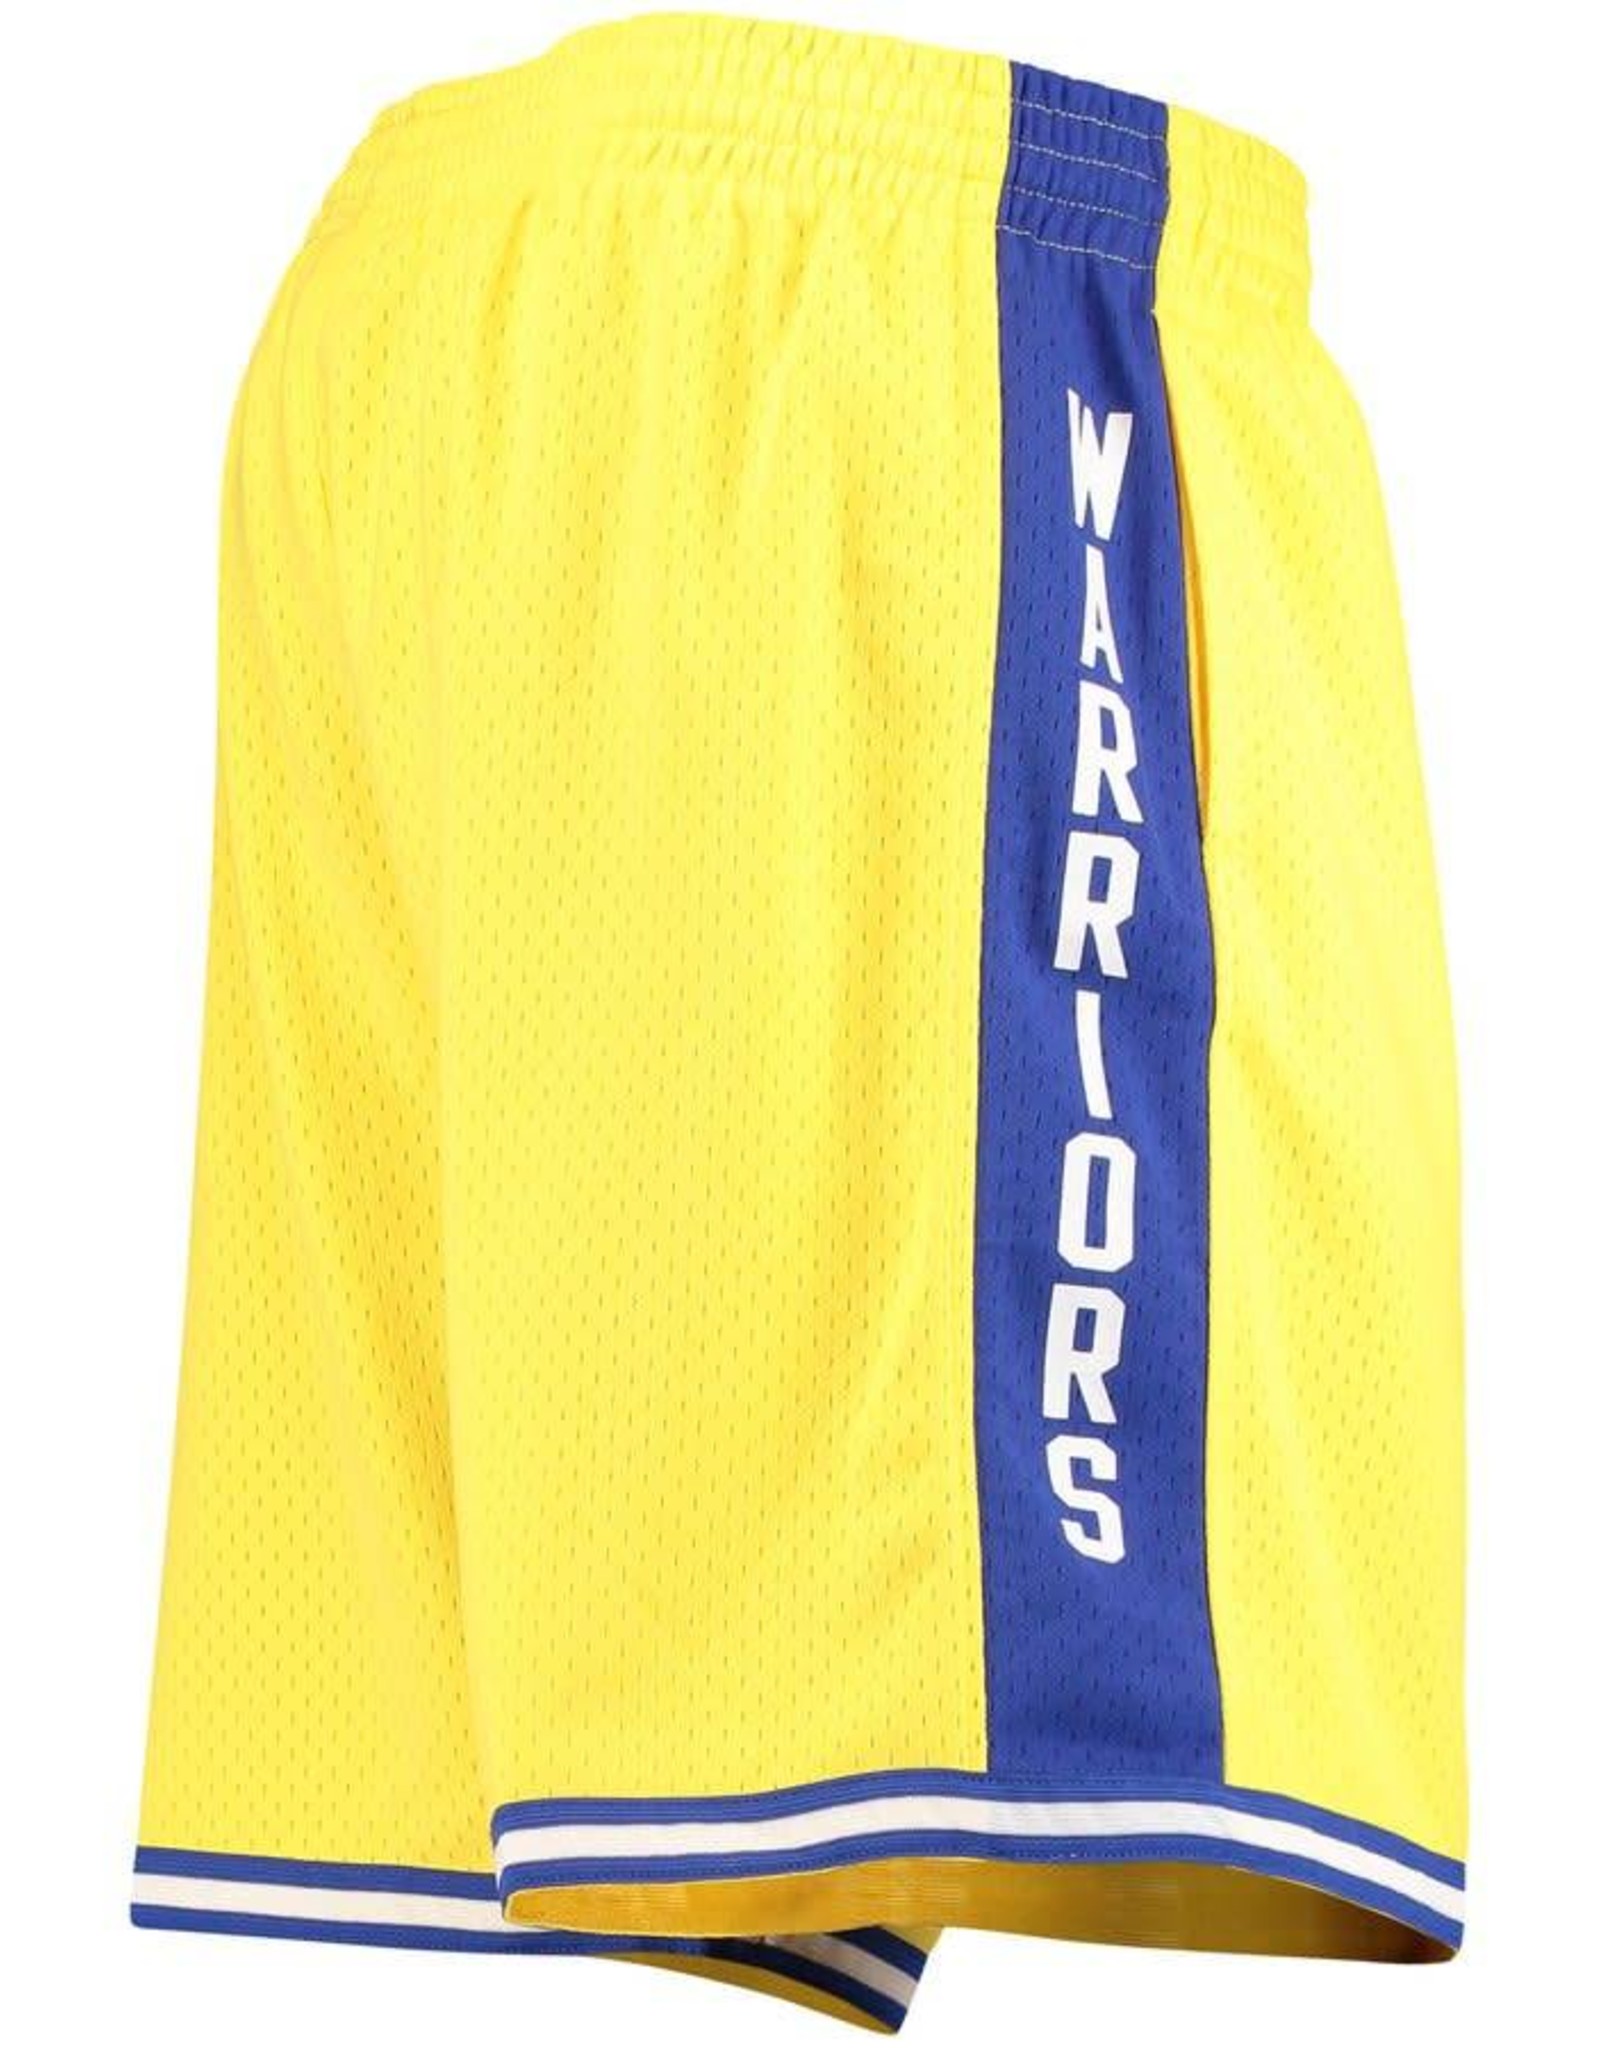 Mitchell & Ness | Golden State Warriors NBA Swingman Shorts (Navy) L